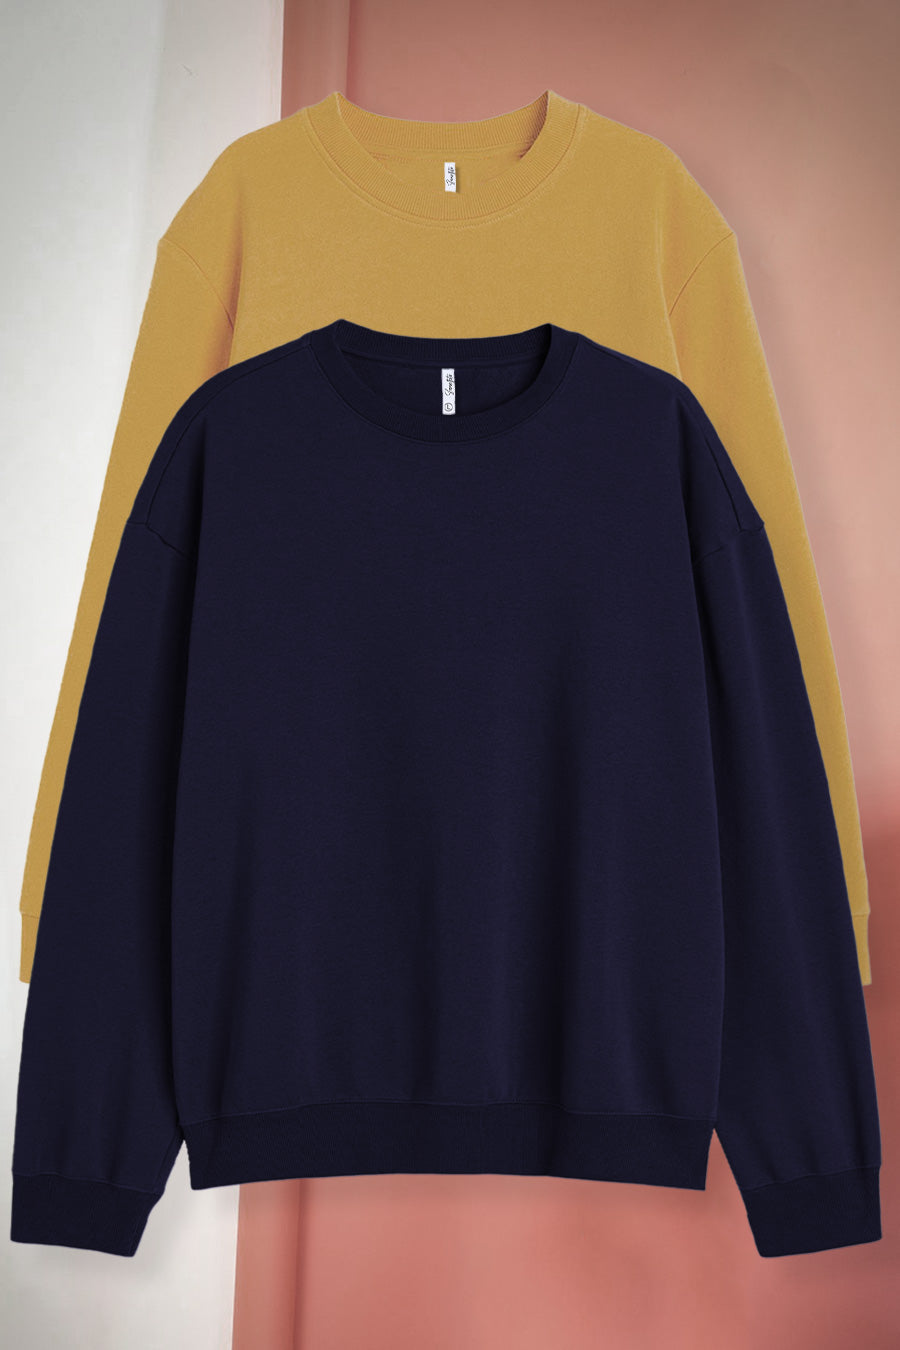 Pack 2 -  Musturd & Navy Blue - Fleece Sweatshirt